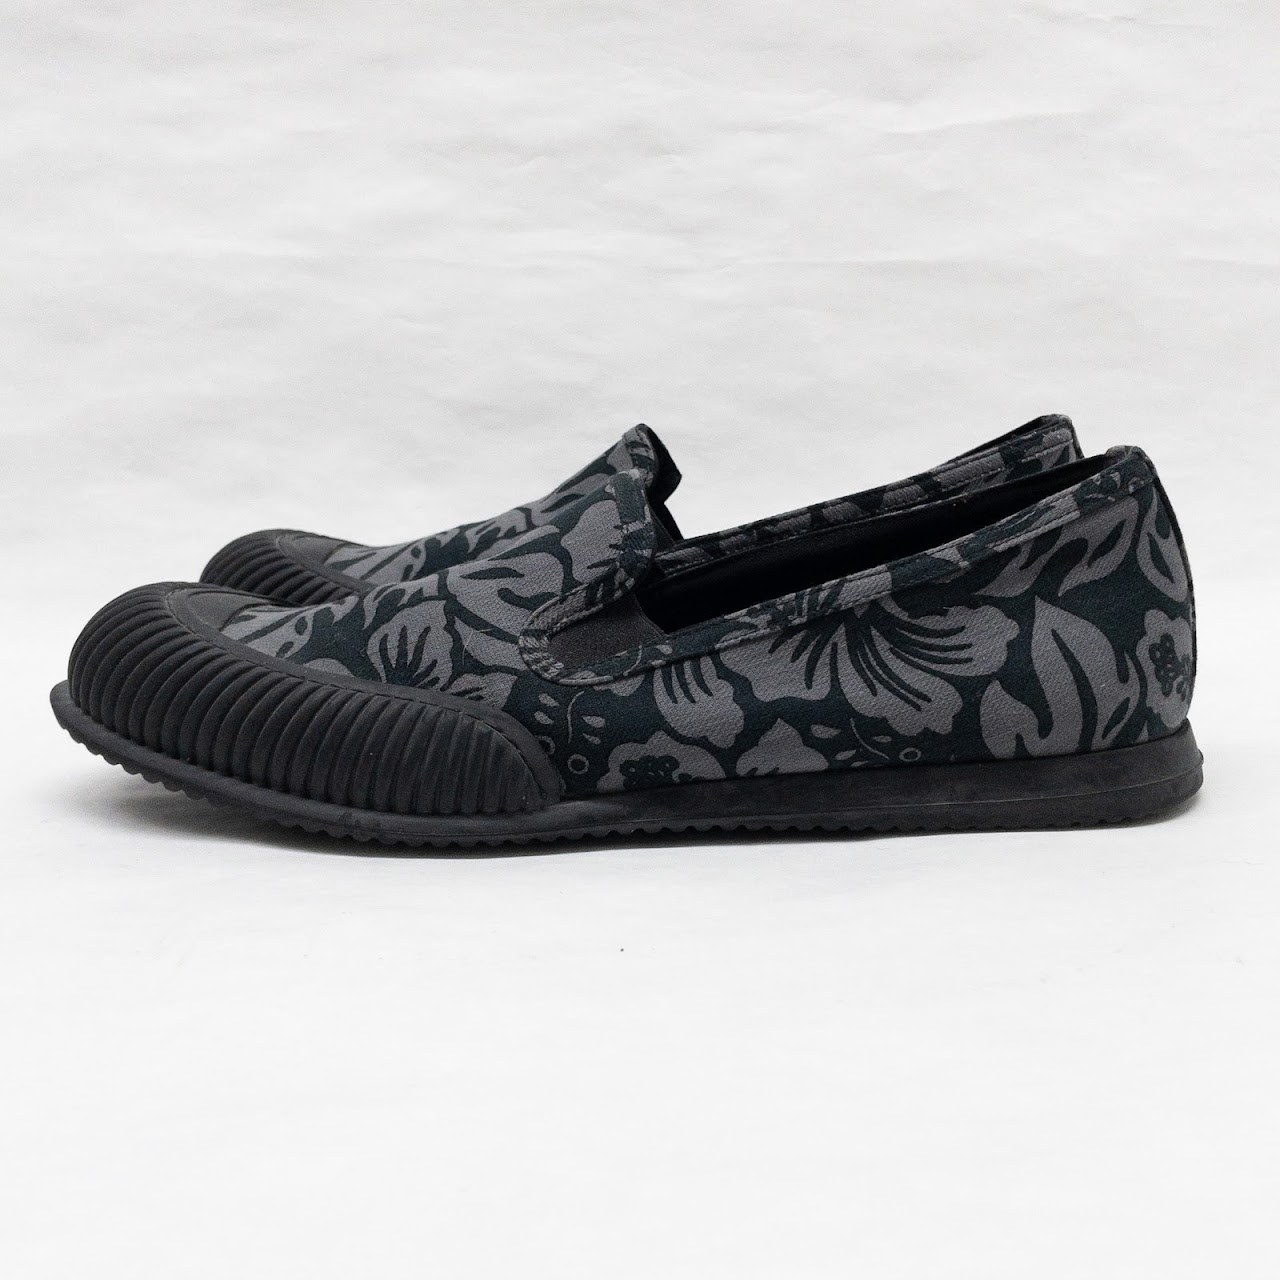 Prada Canvas Black & Grey Hibiscus Sneakers